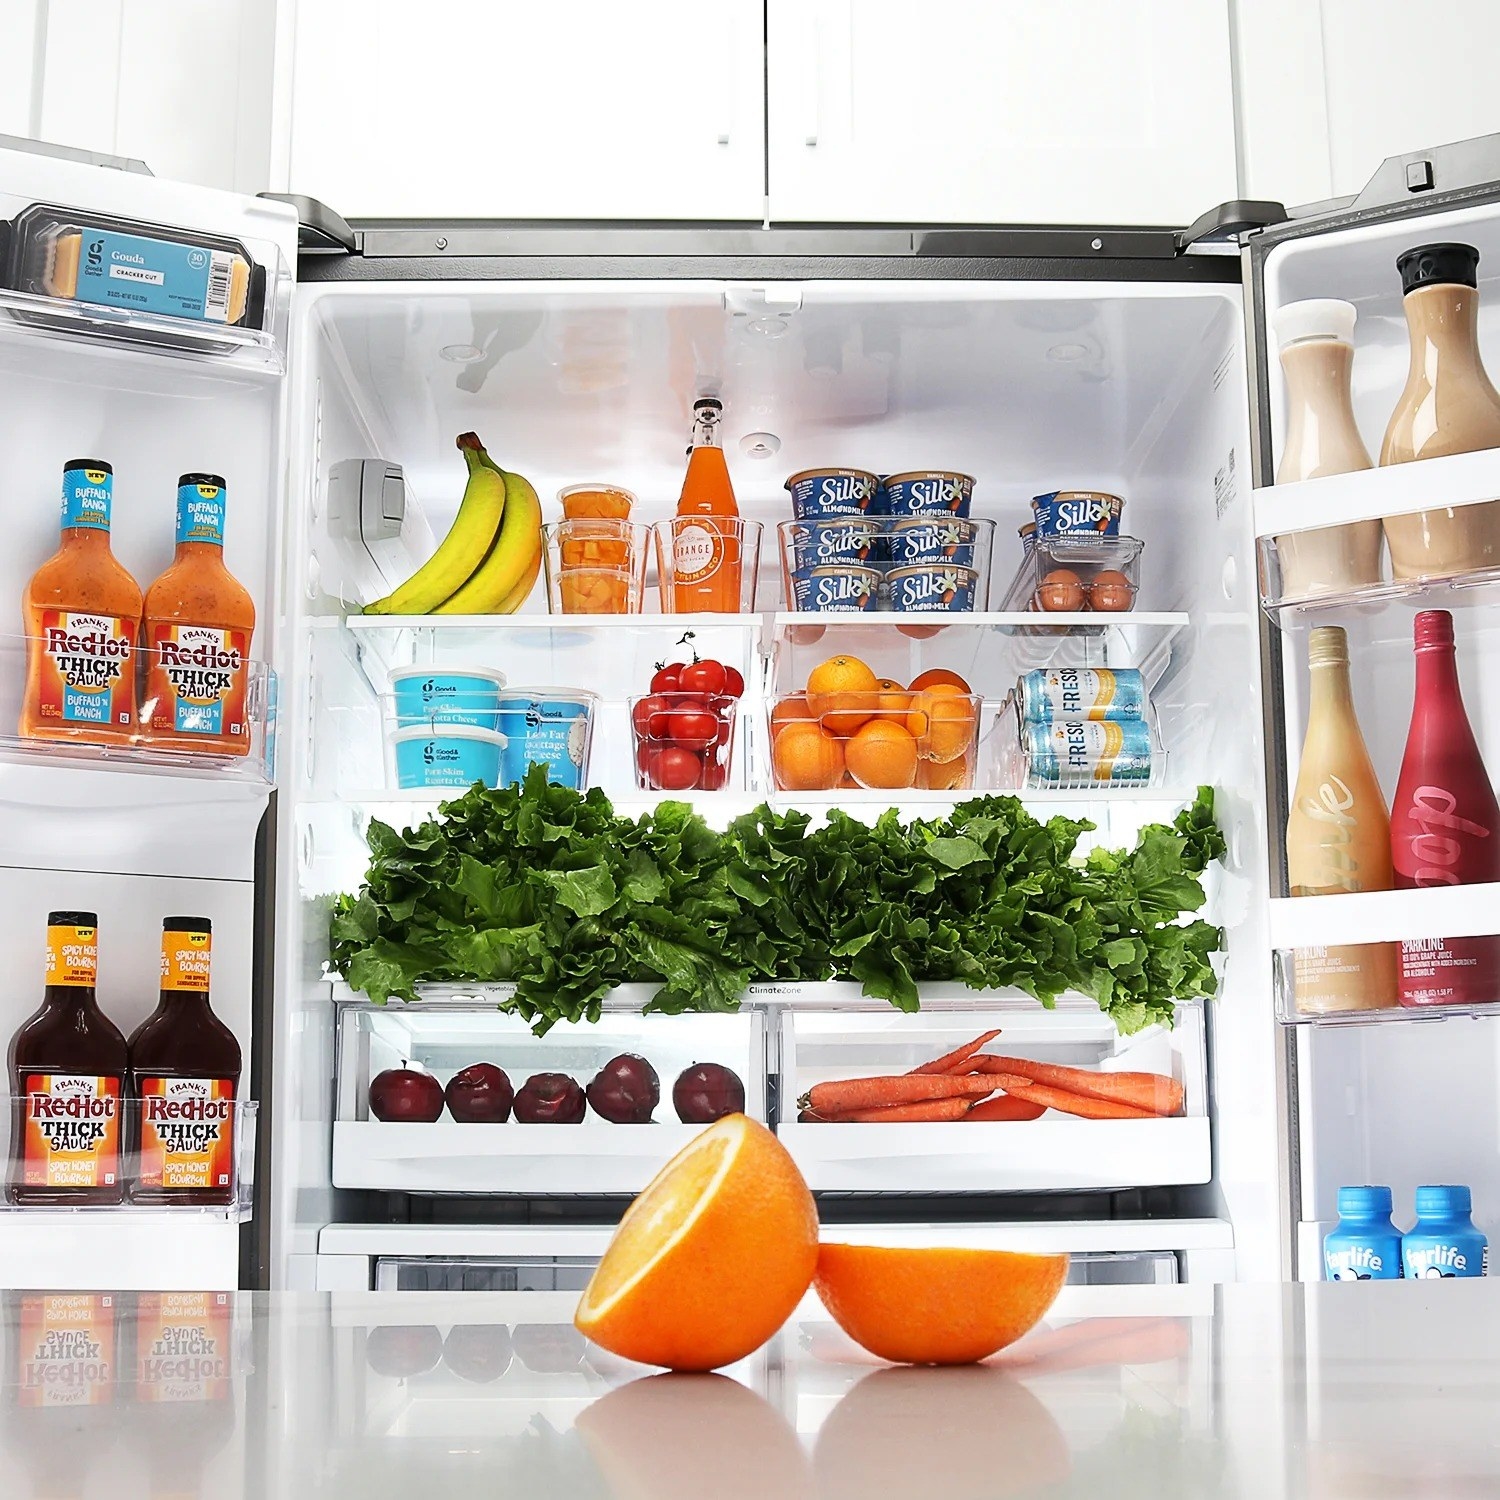 Clear fridge organizer bins with produce on fridge shelves